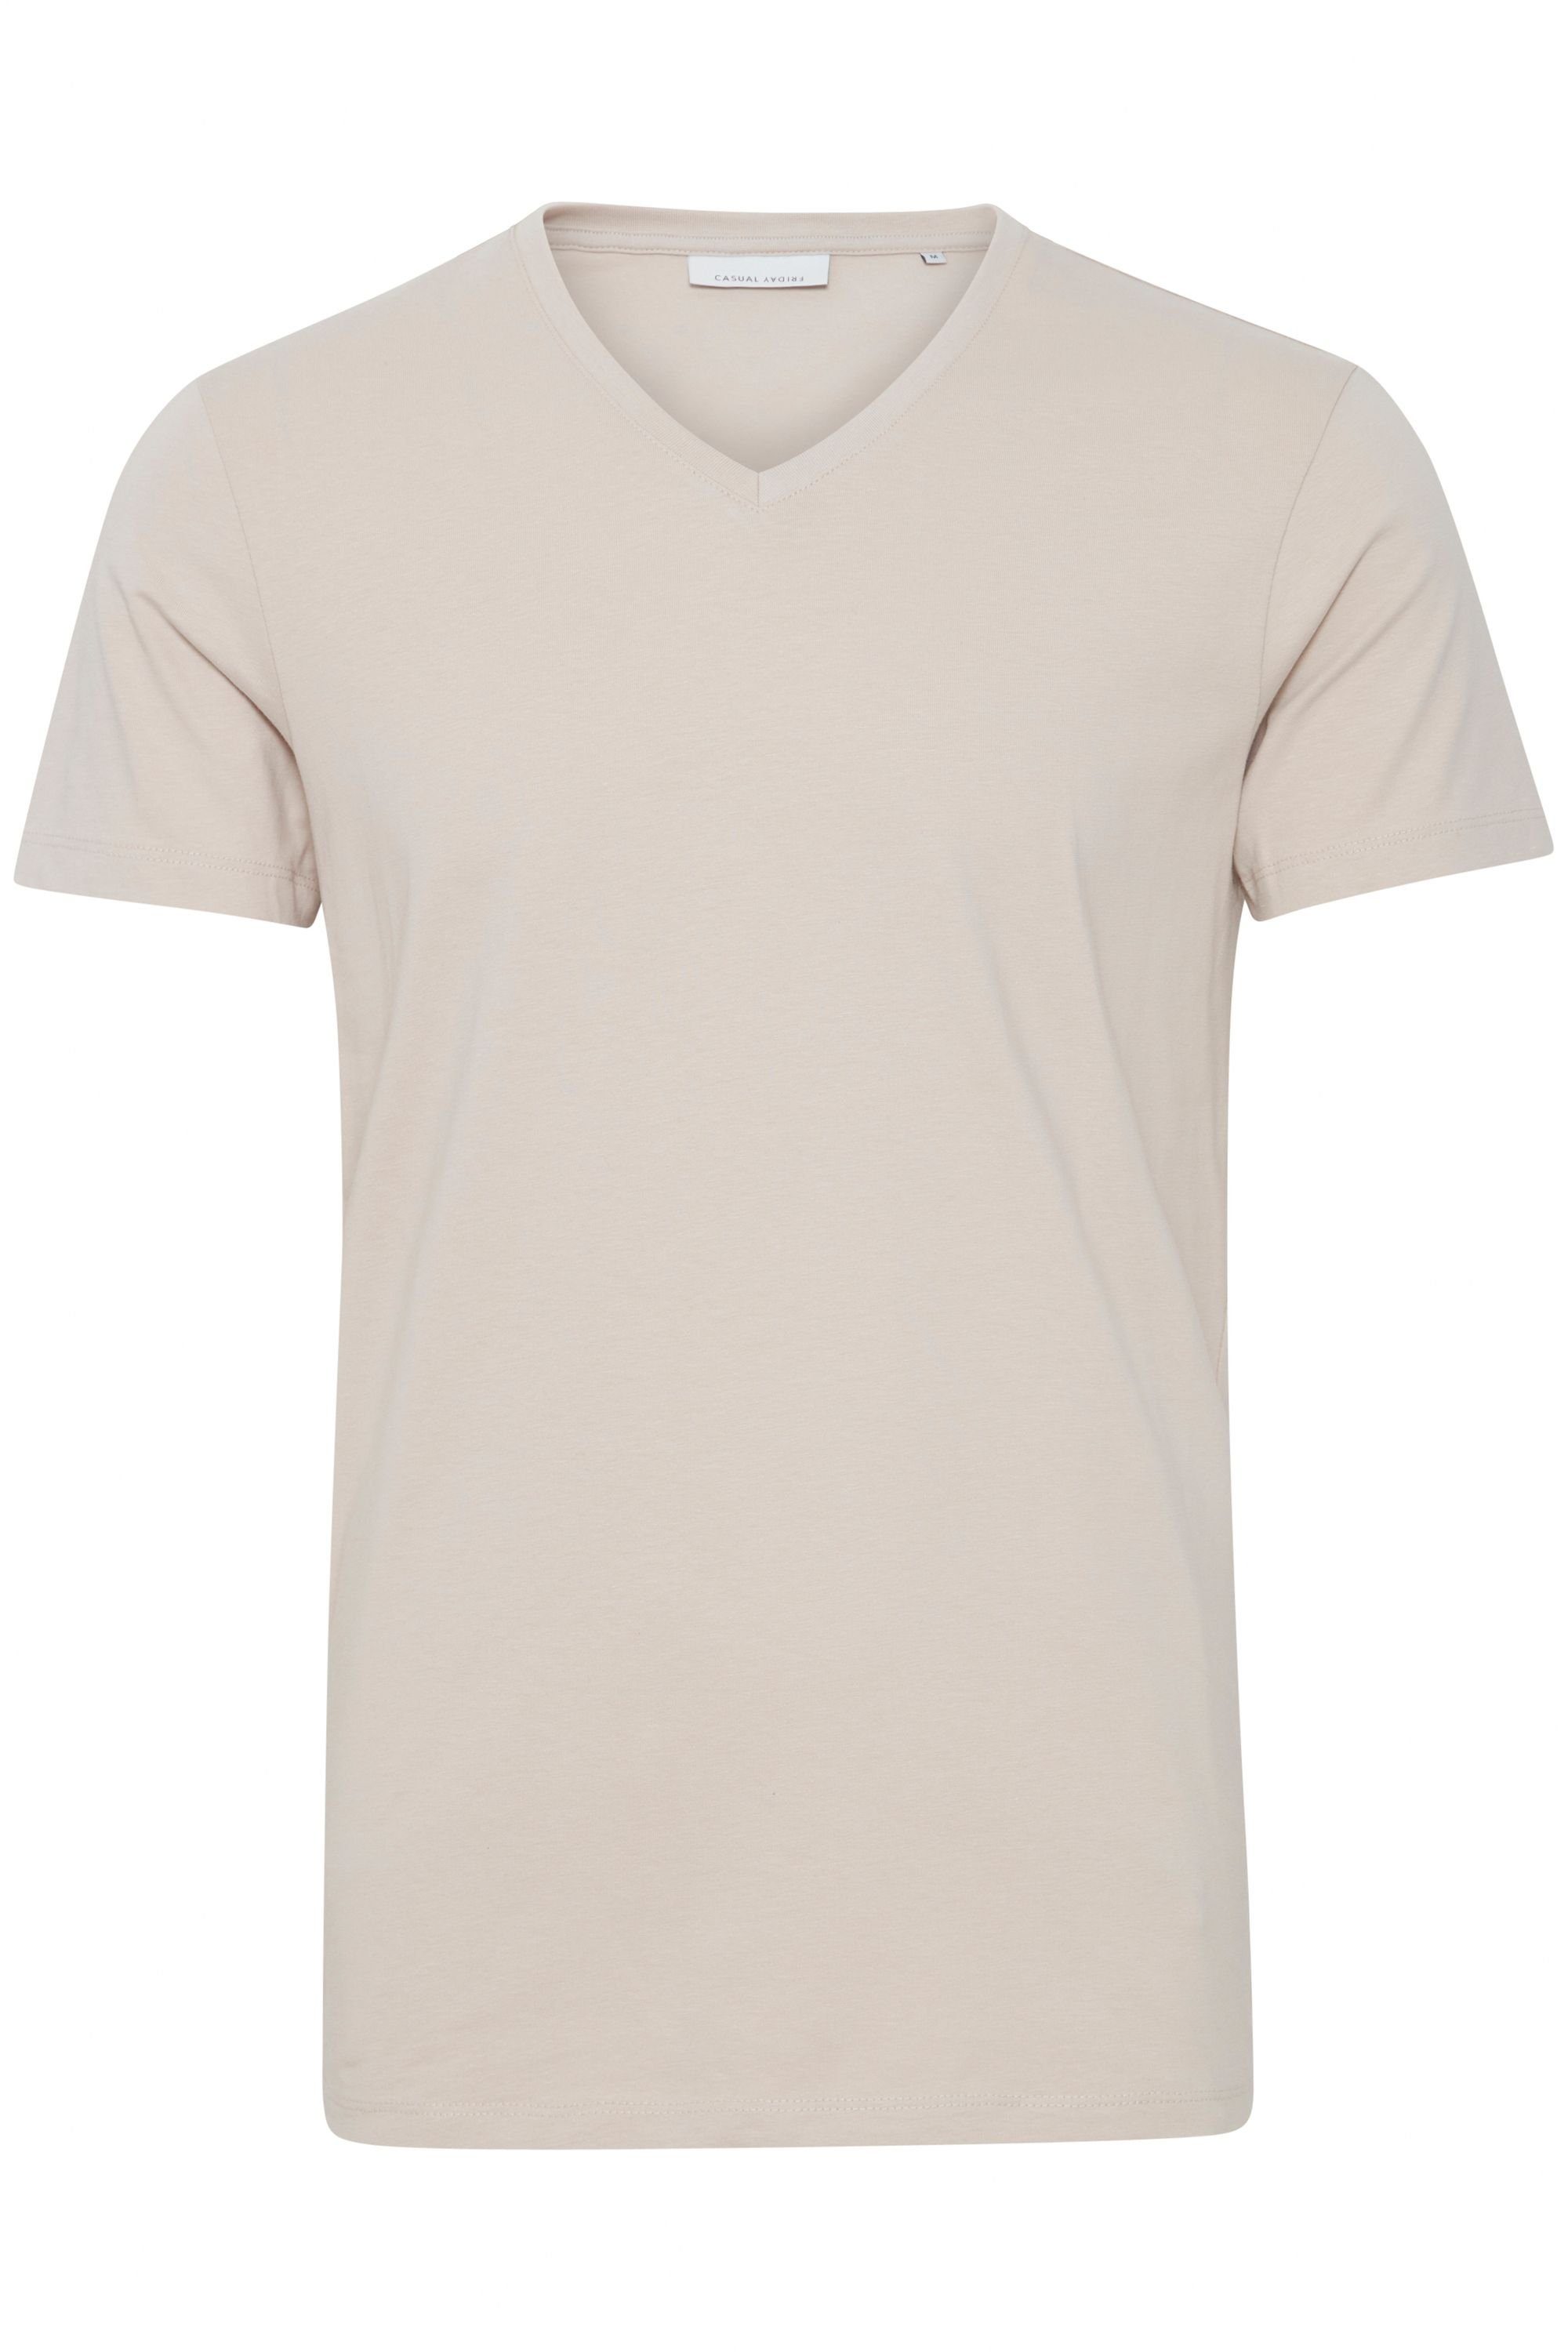 Casual Friday CFLincoln Chateau 20503062 T-Shirt (154503) - Gray